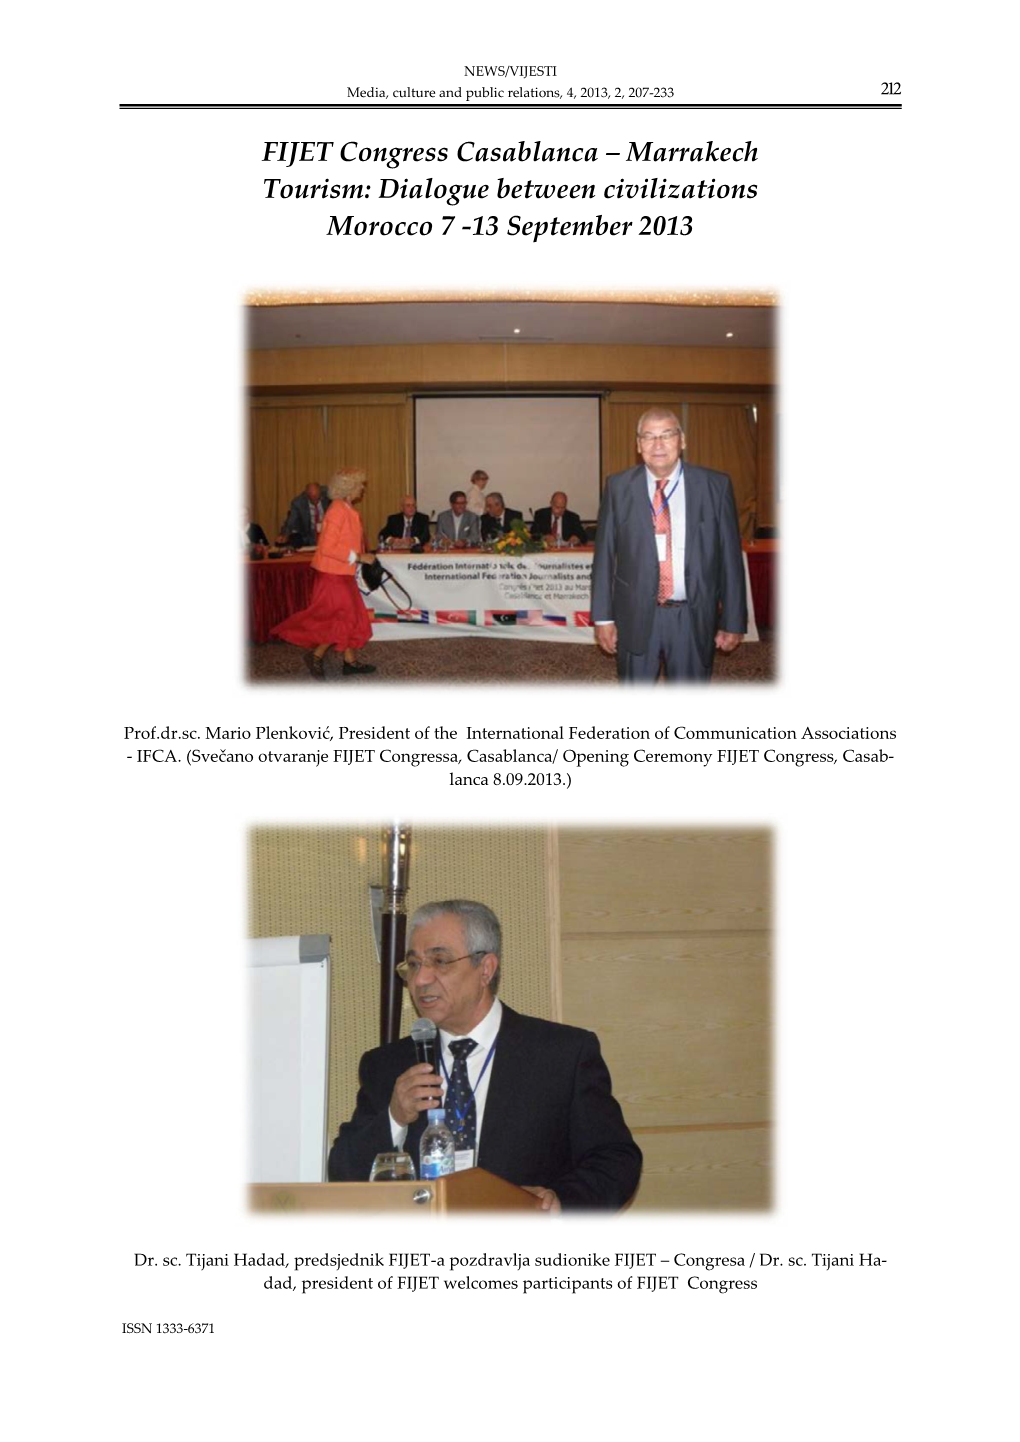 FIJET Congress Casablanca ‒ Marrakech Tourism: Dialogue